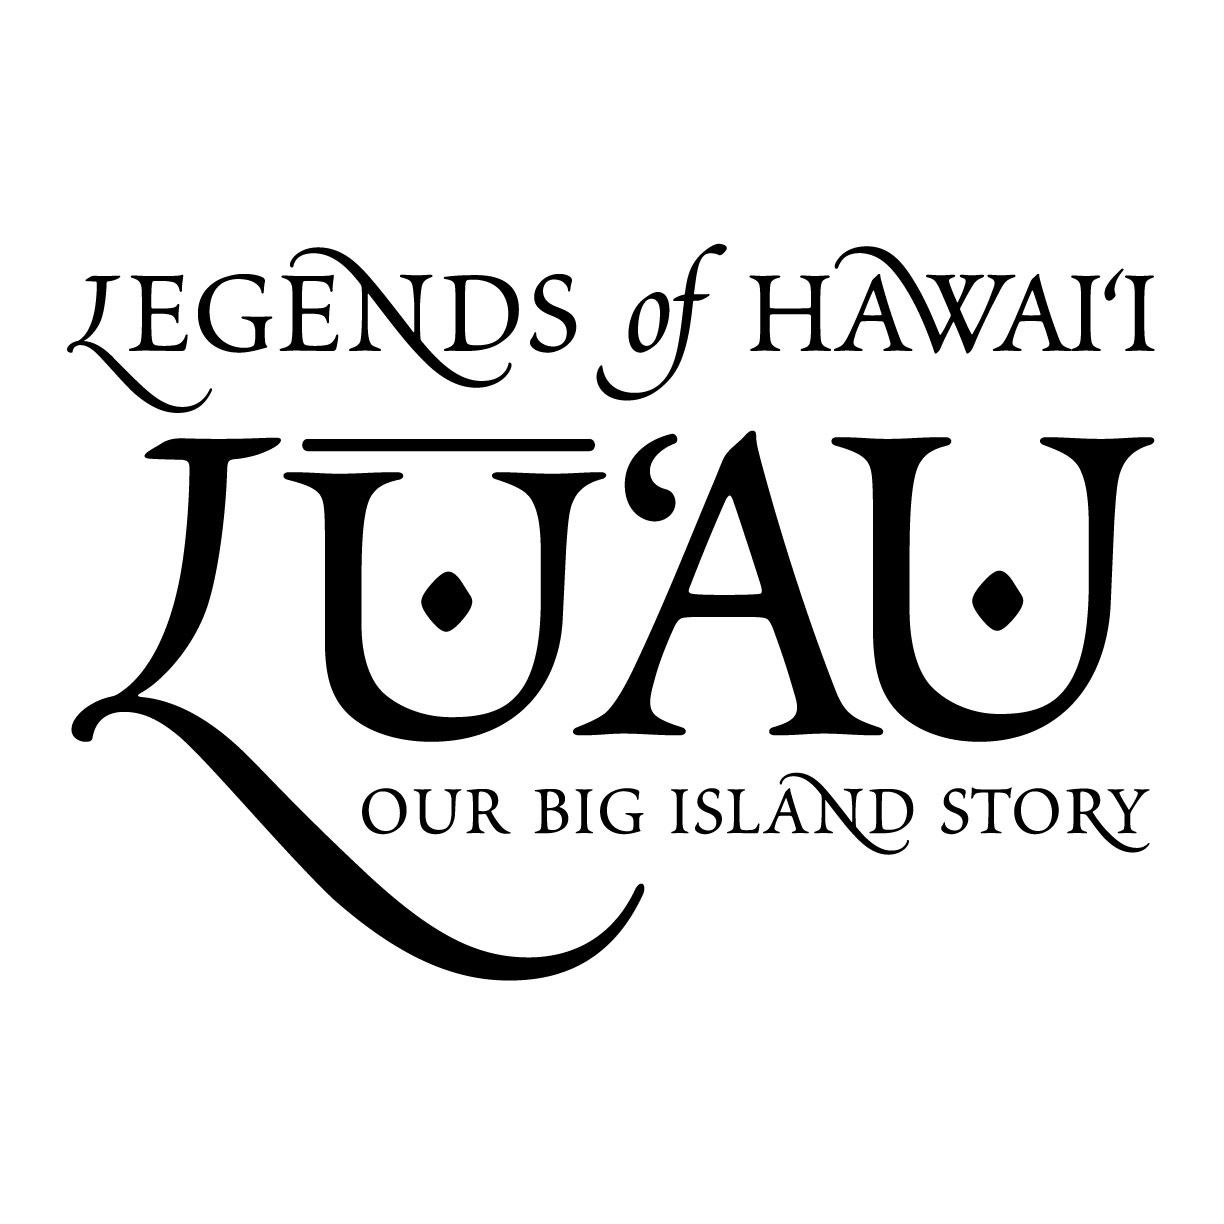 Legends of Hawaii Luau